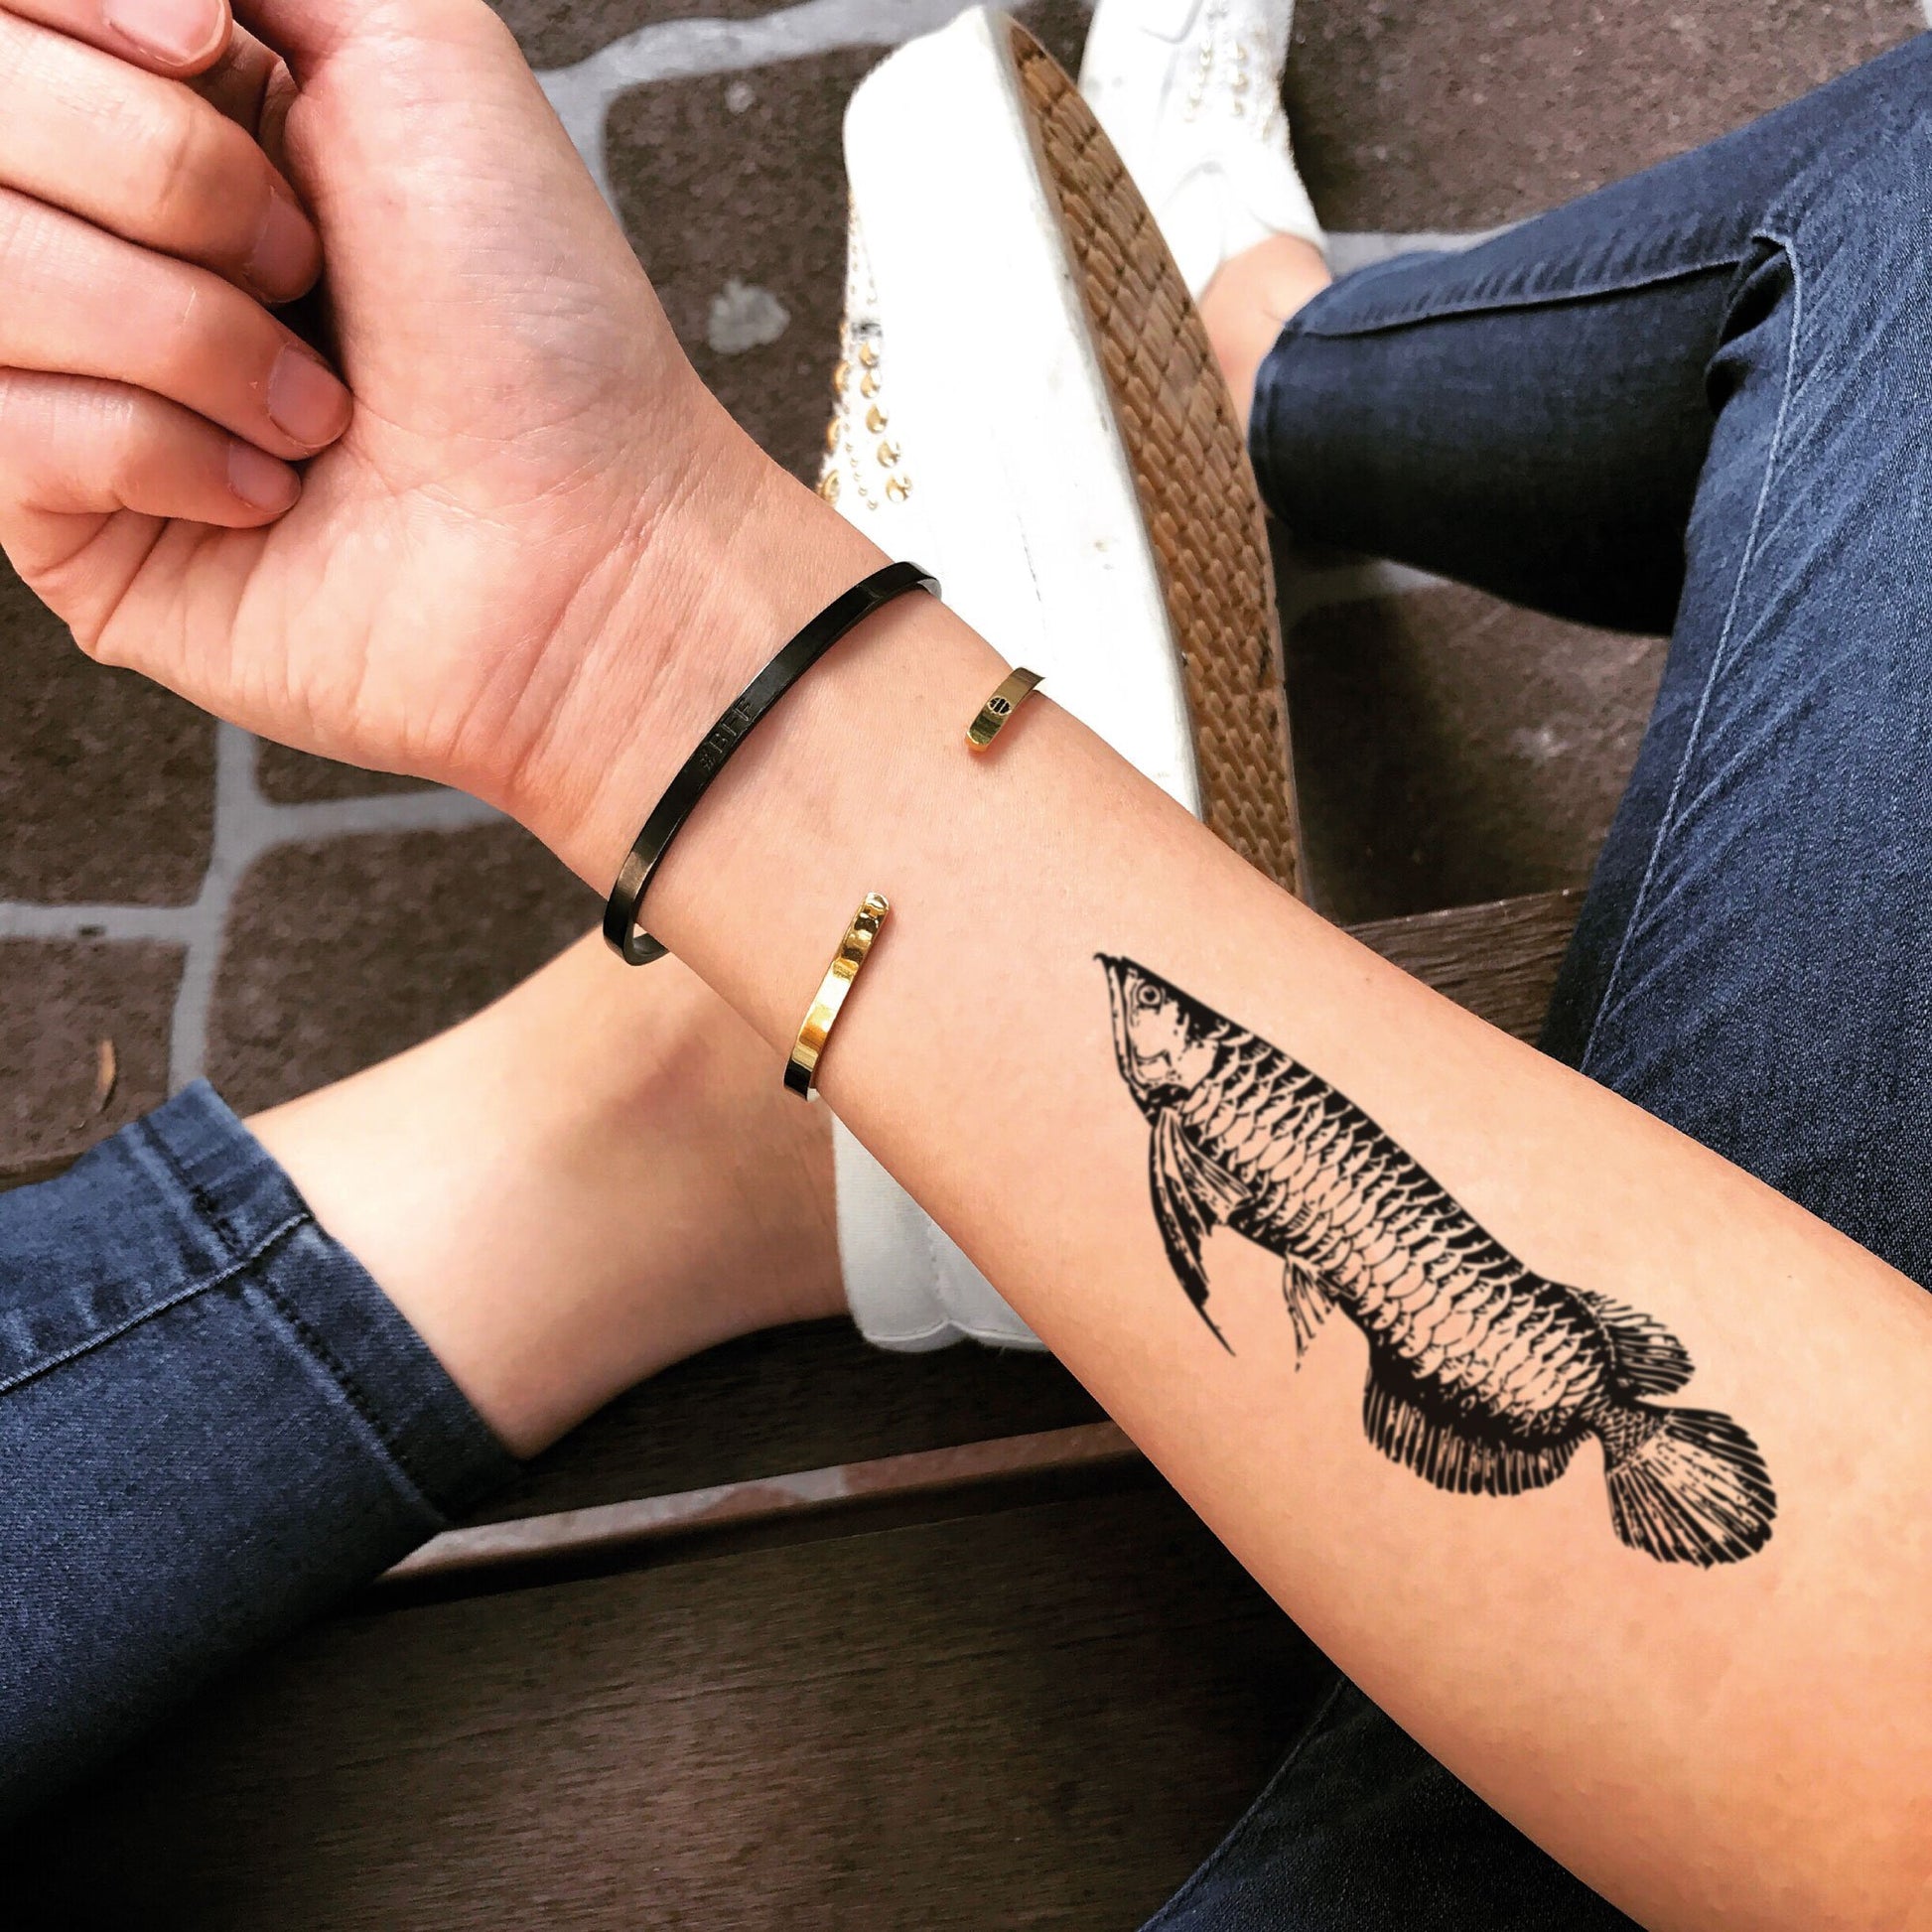 fake medium arowana animal temporary tattoo sticker design idea on forearm